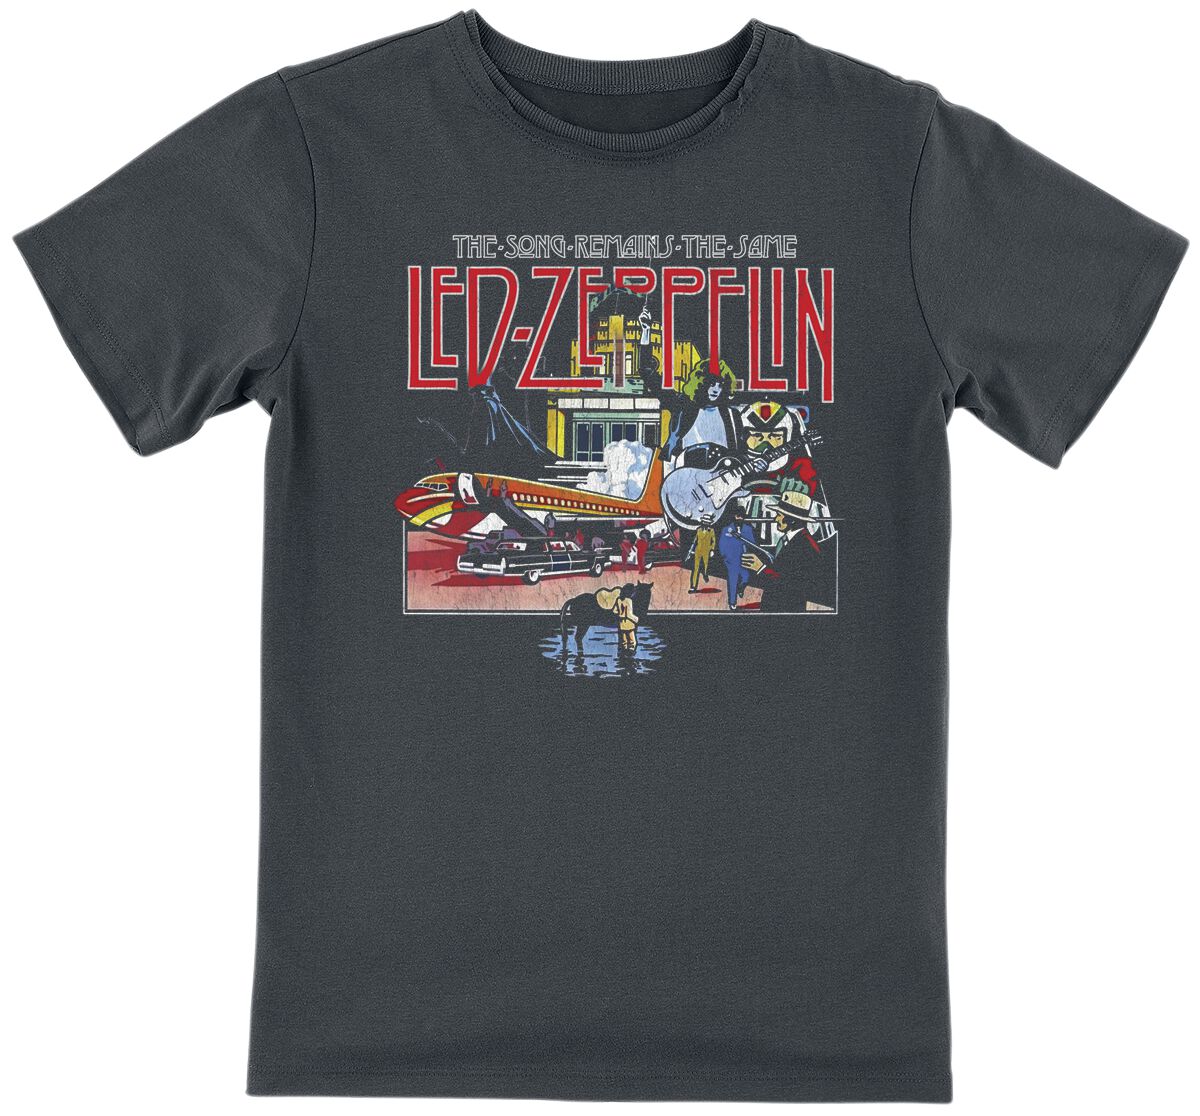 Led Zeppelin T-Shirt für Kinder - Amplified Collection - Kids - The Song Remains The Same Tour - für Mädchen & Jungen - charcoal  - Lizenziertes